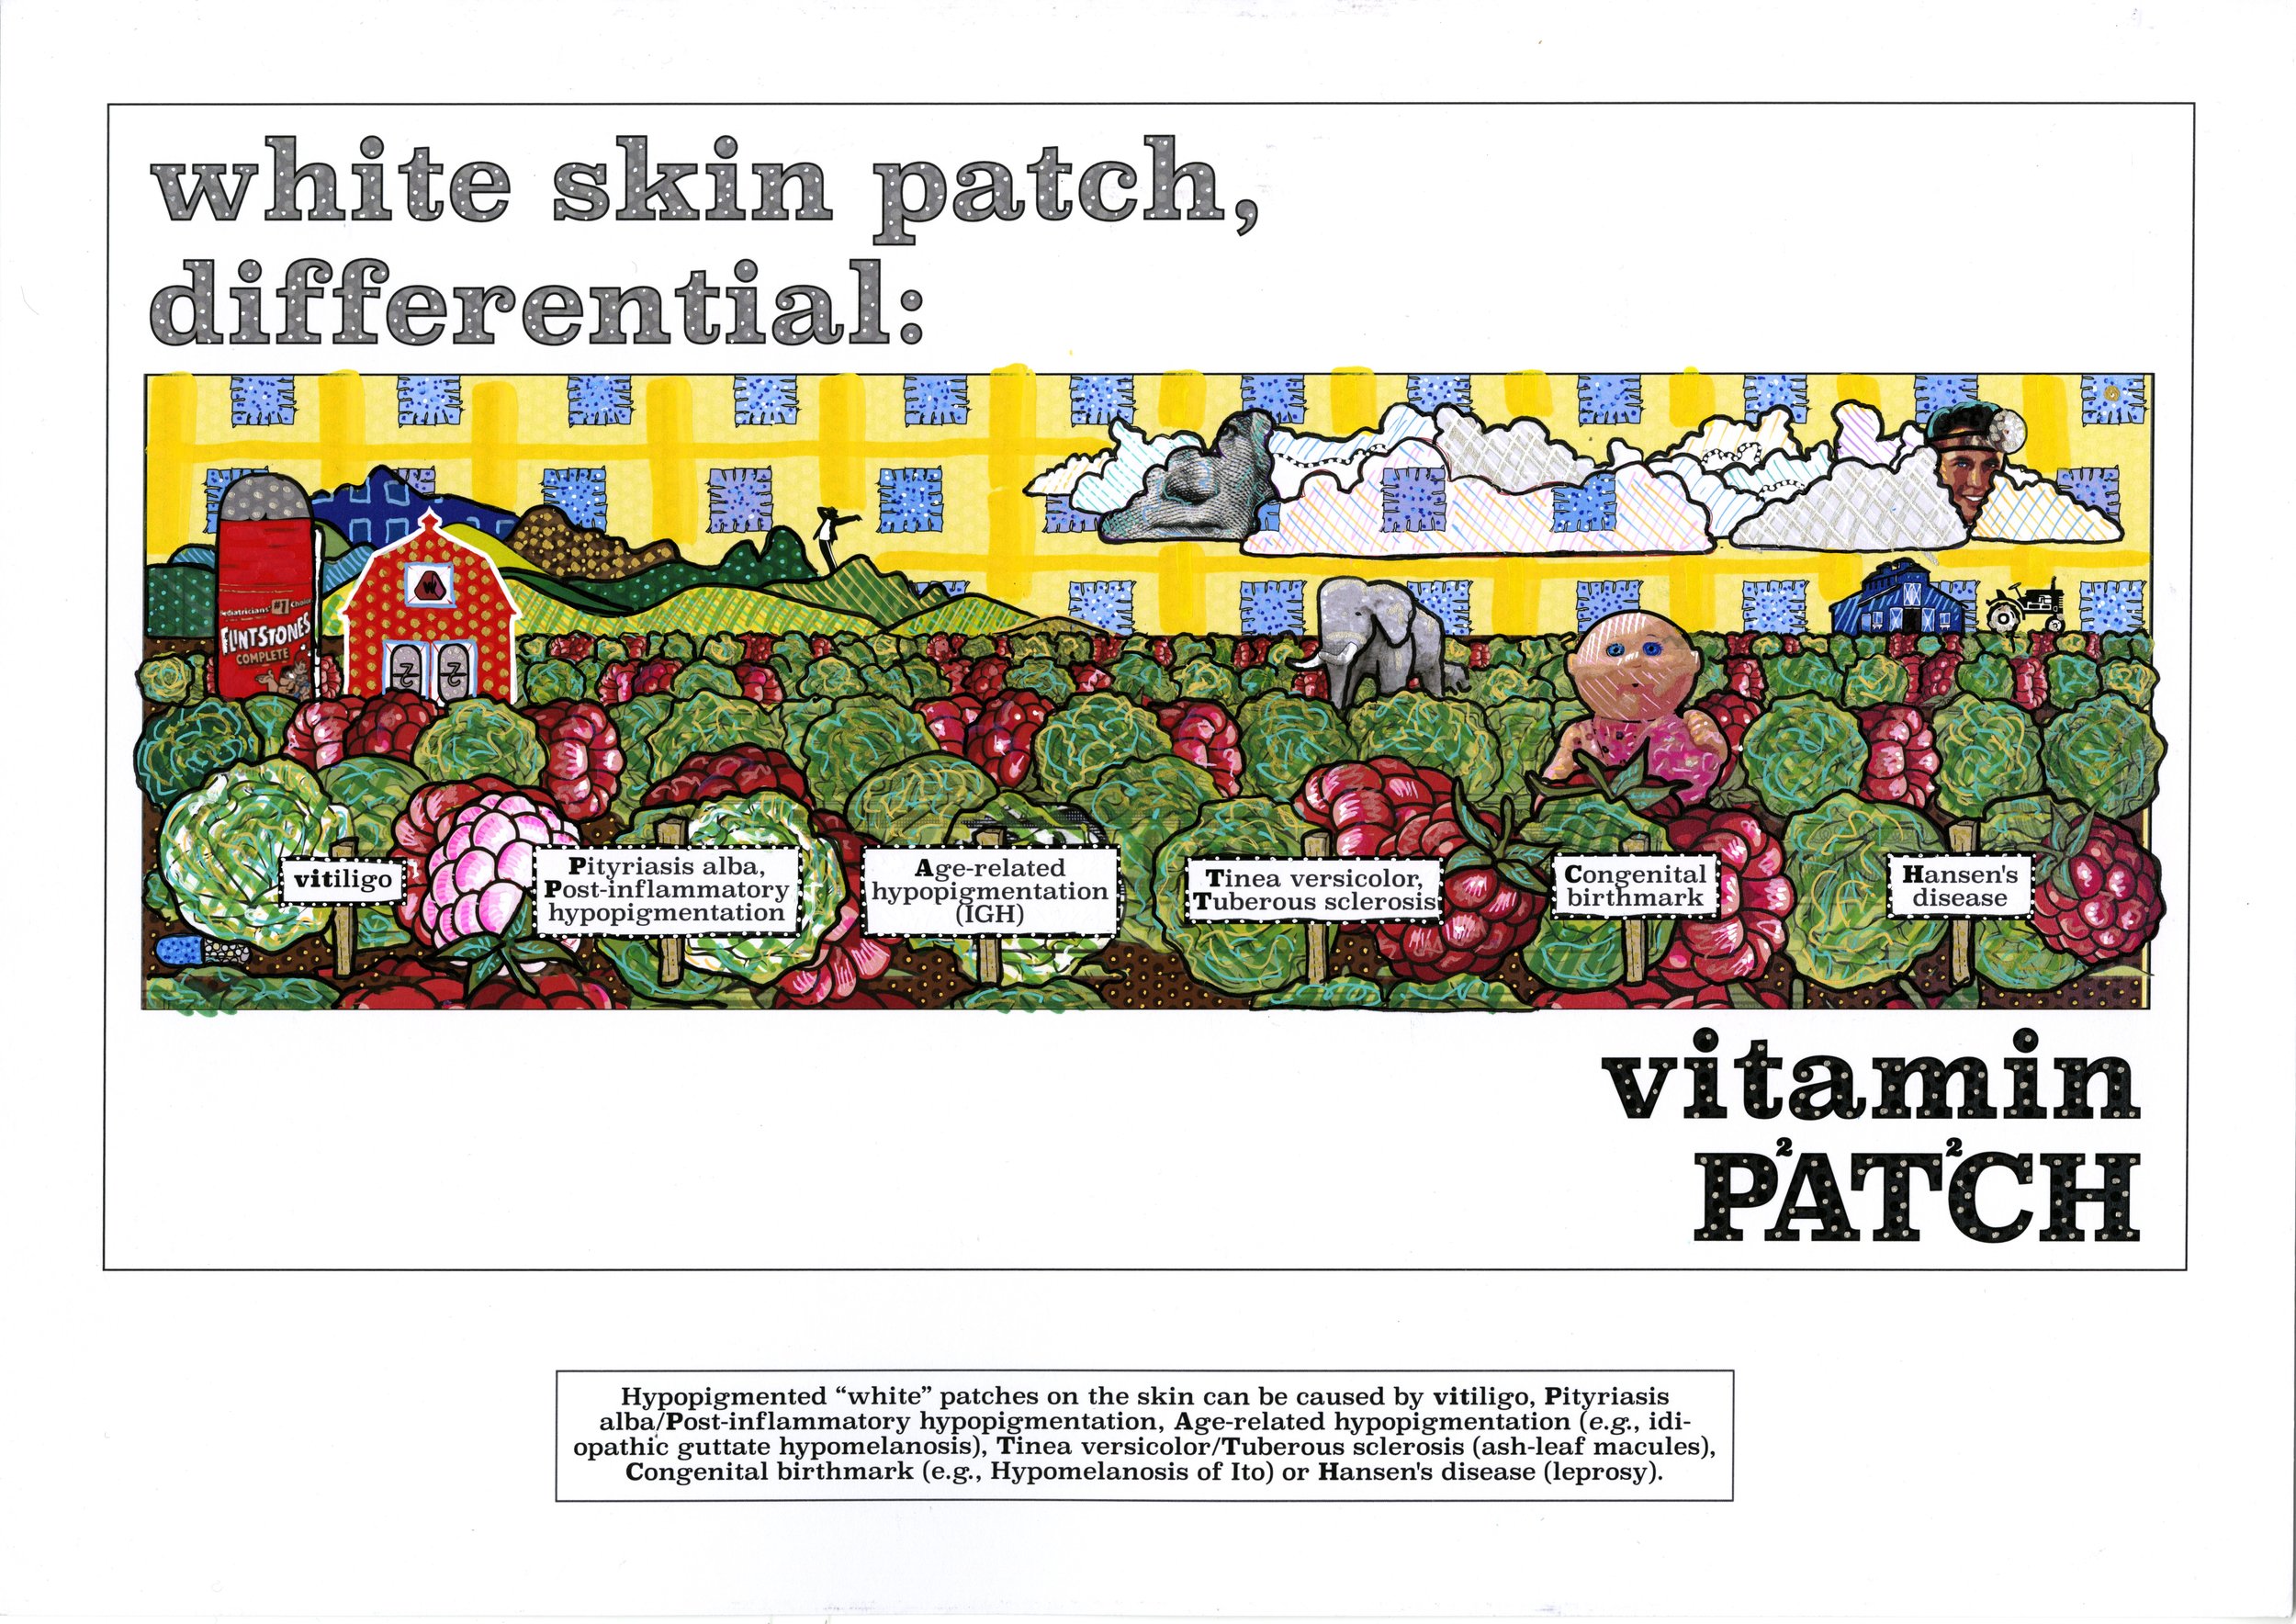 7 vitamin PATCH.jpg